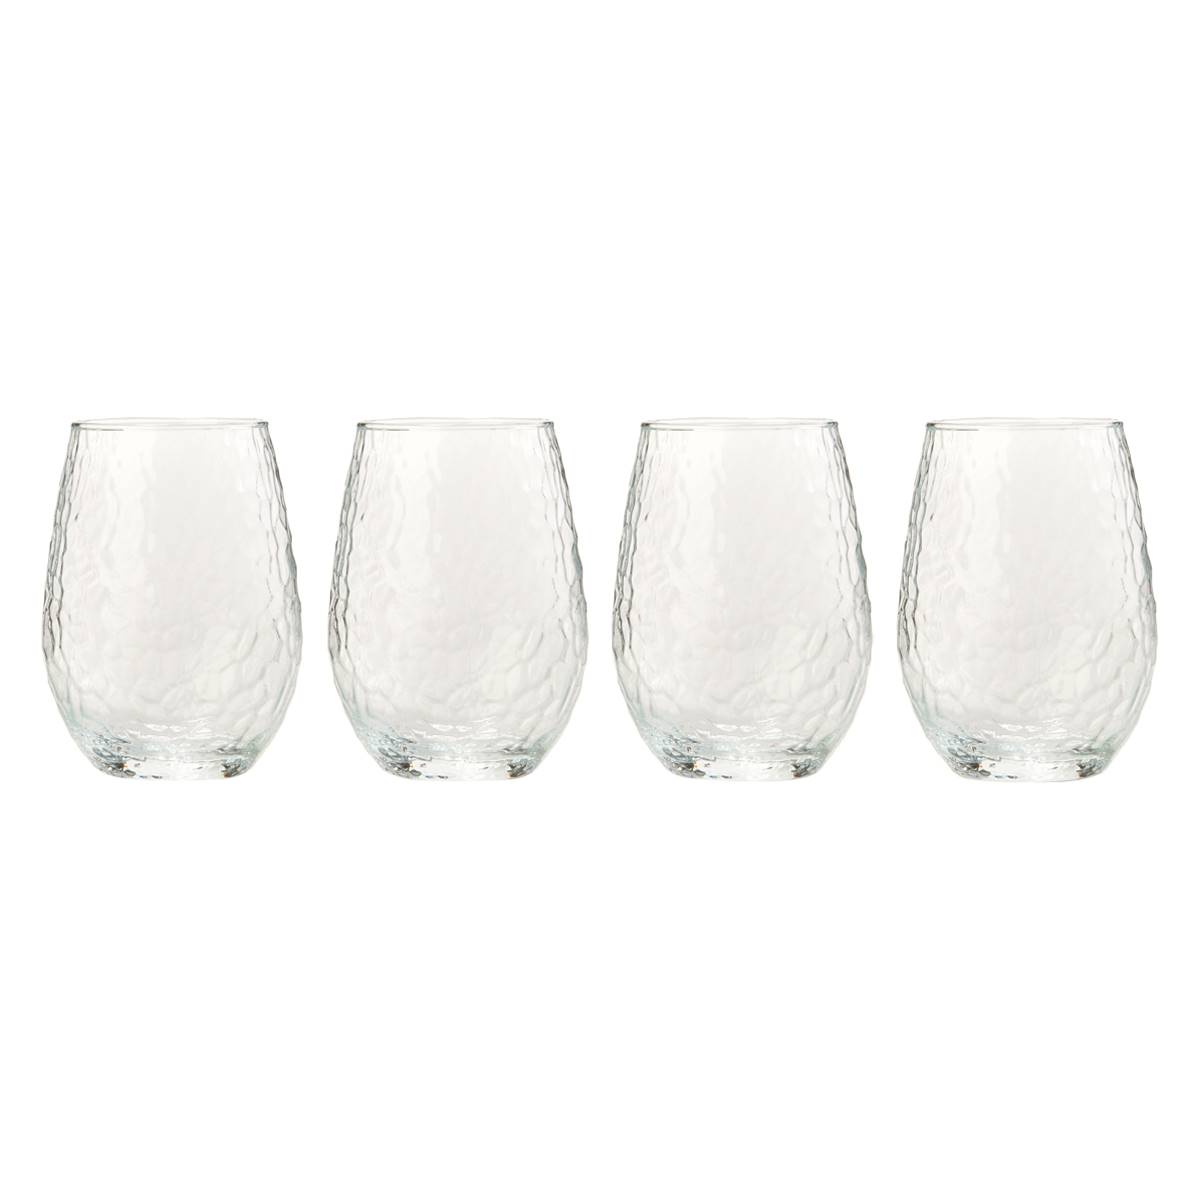 Circleware 18.5oz. Textured Stemless Wine Glasses - Set Of 4